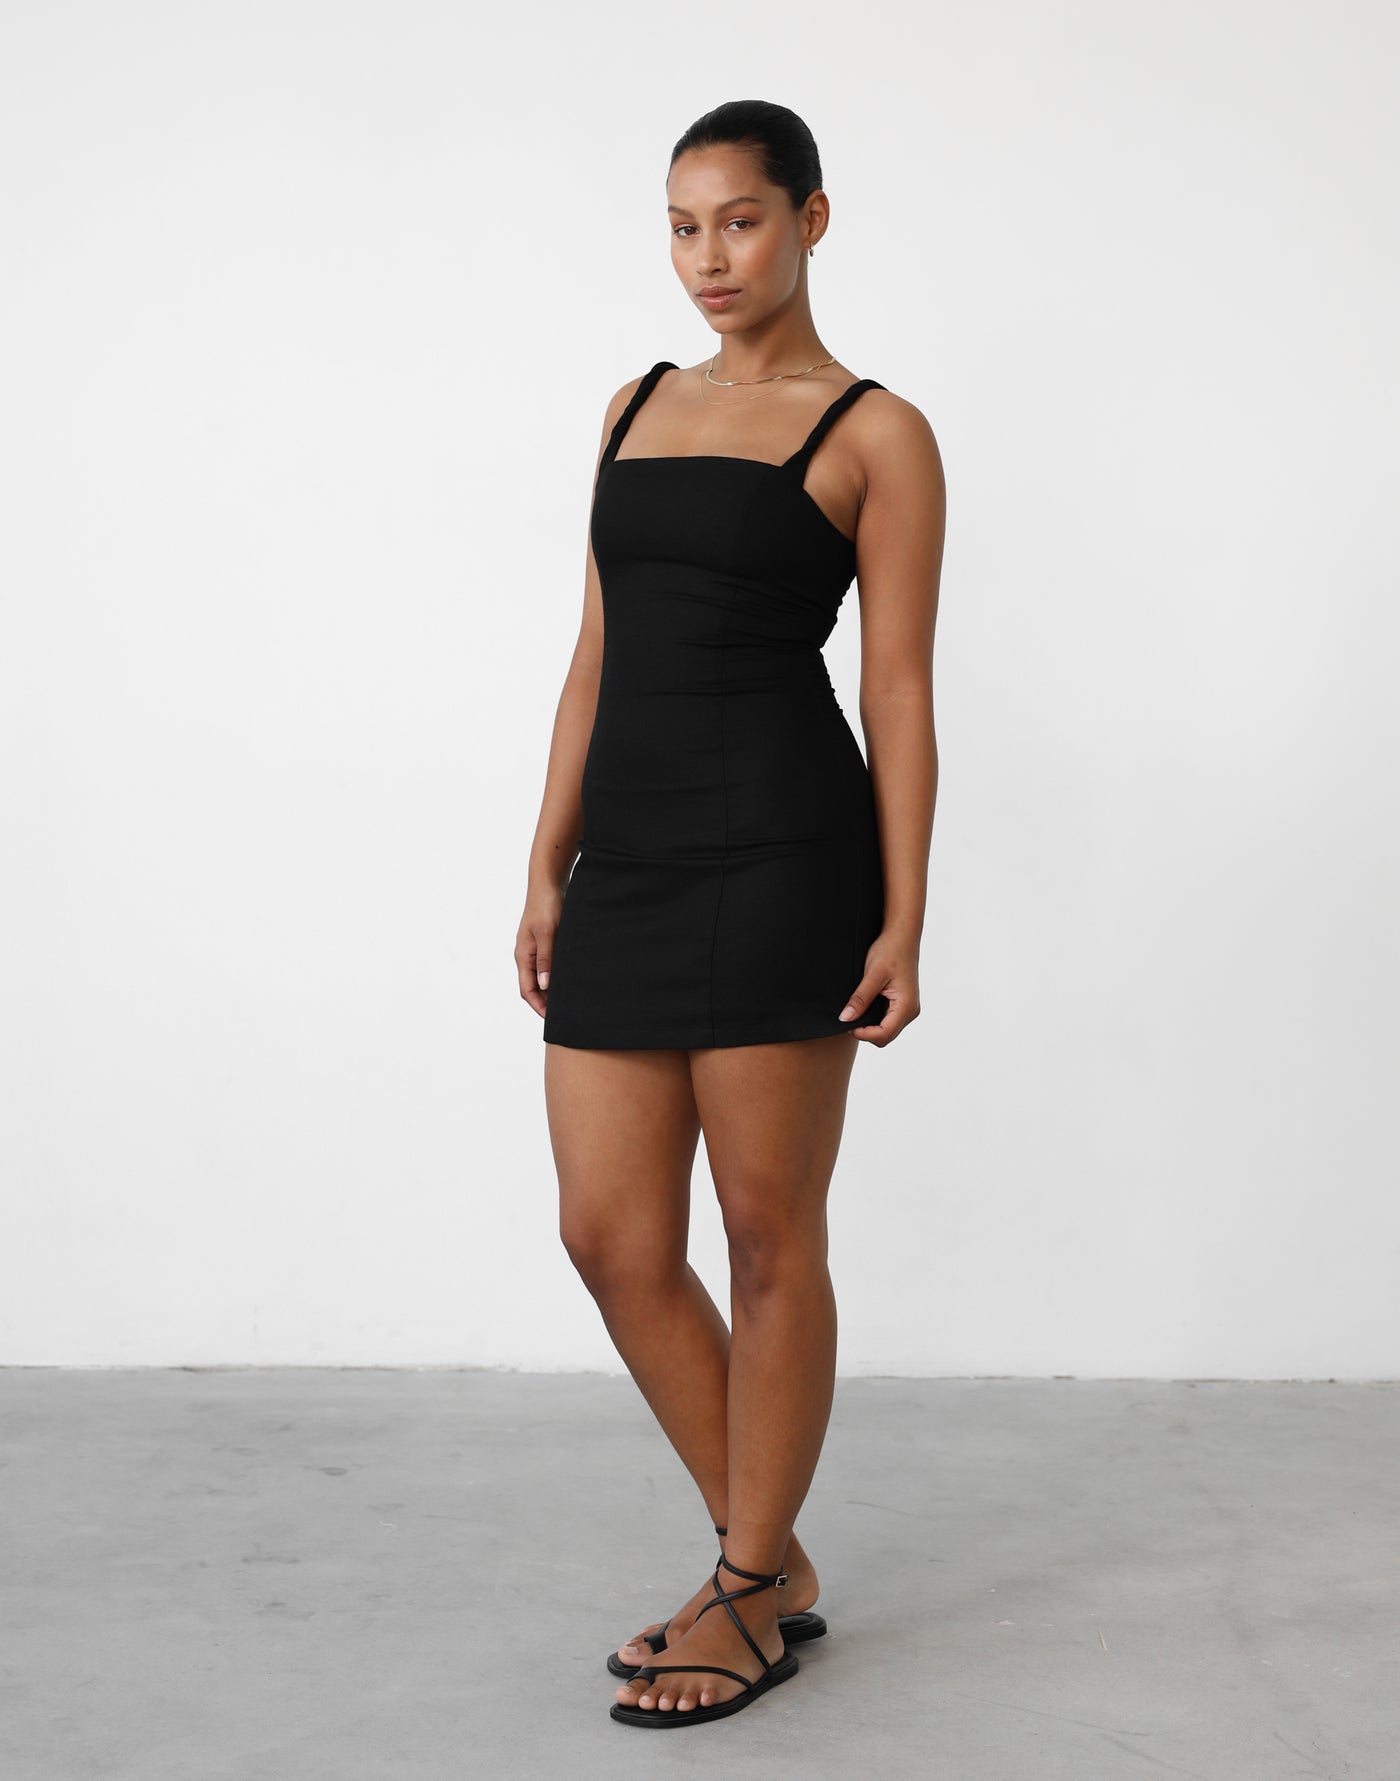 Bacalar Mini Dress (Black) - Twisted Strap Mini Dress - Women's Dress - Charcoal Clothing